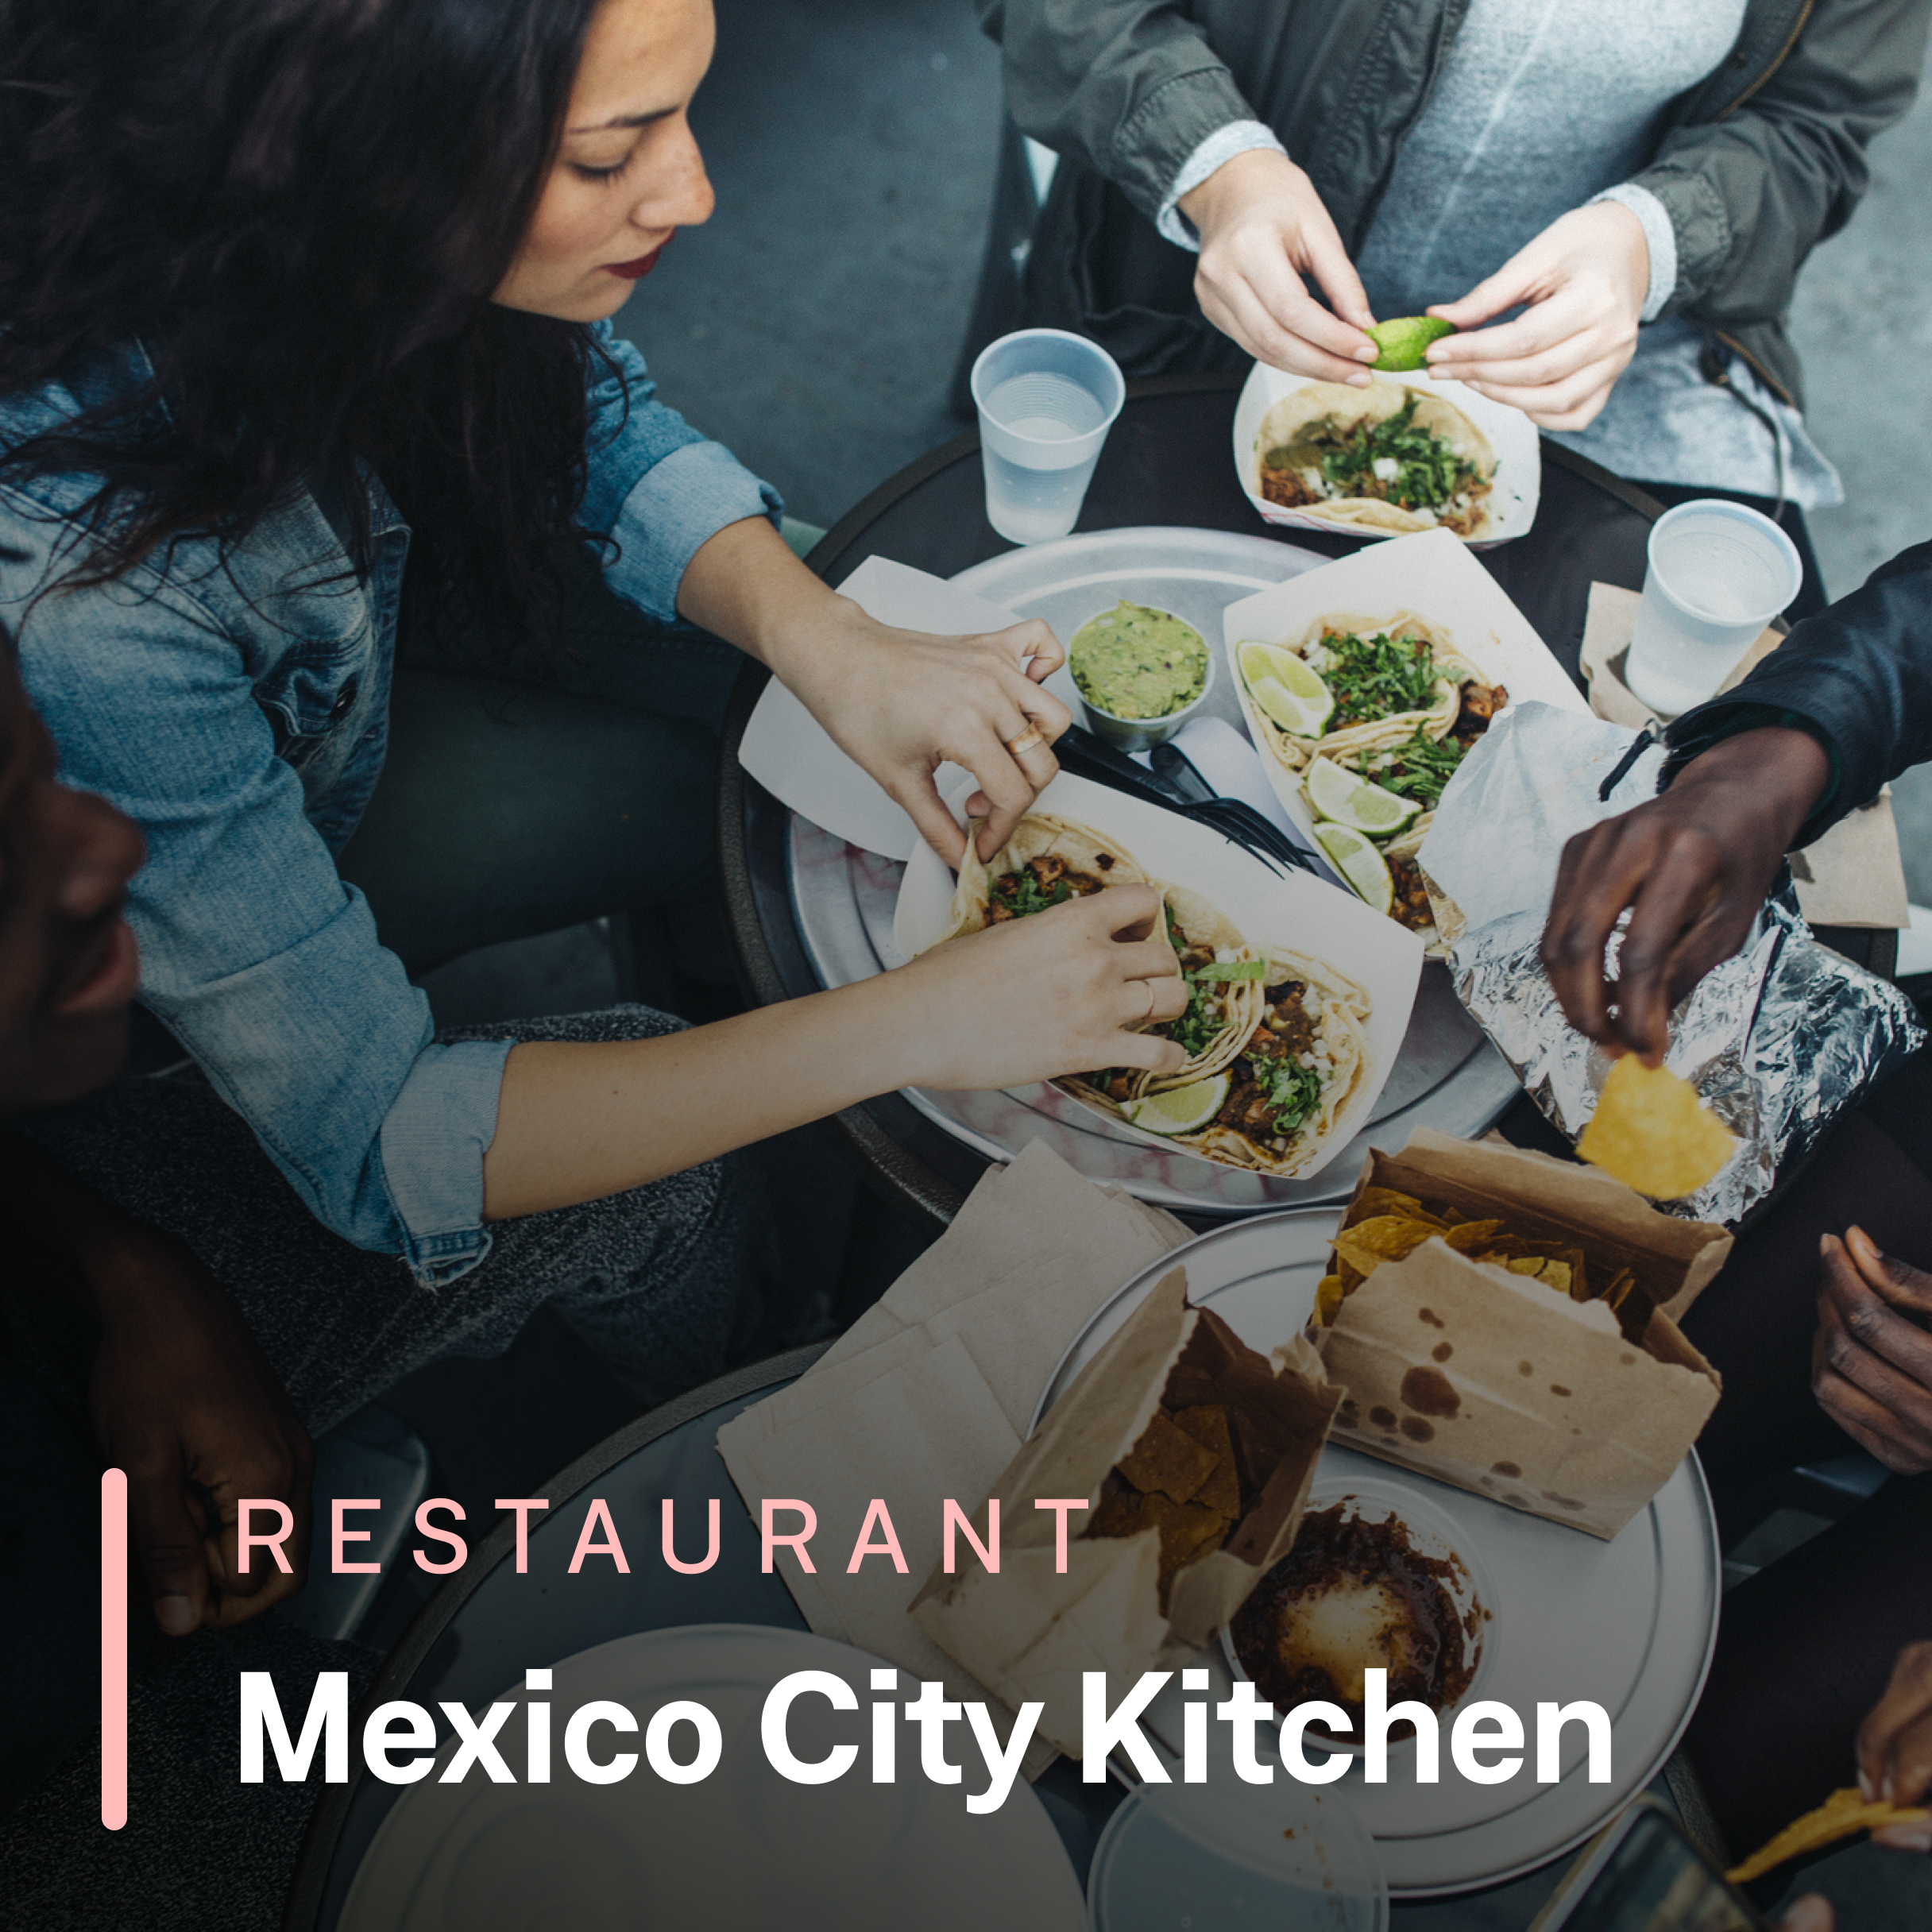 Mexico City Kitchen Playlist